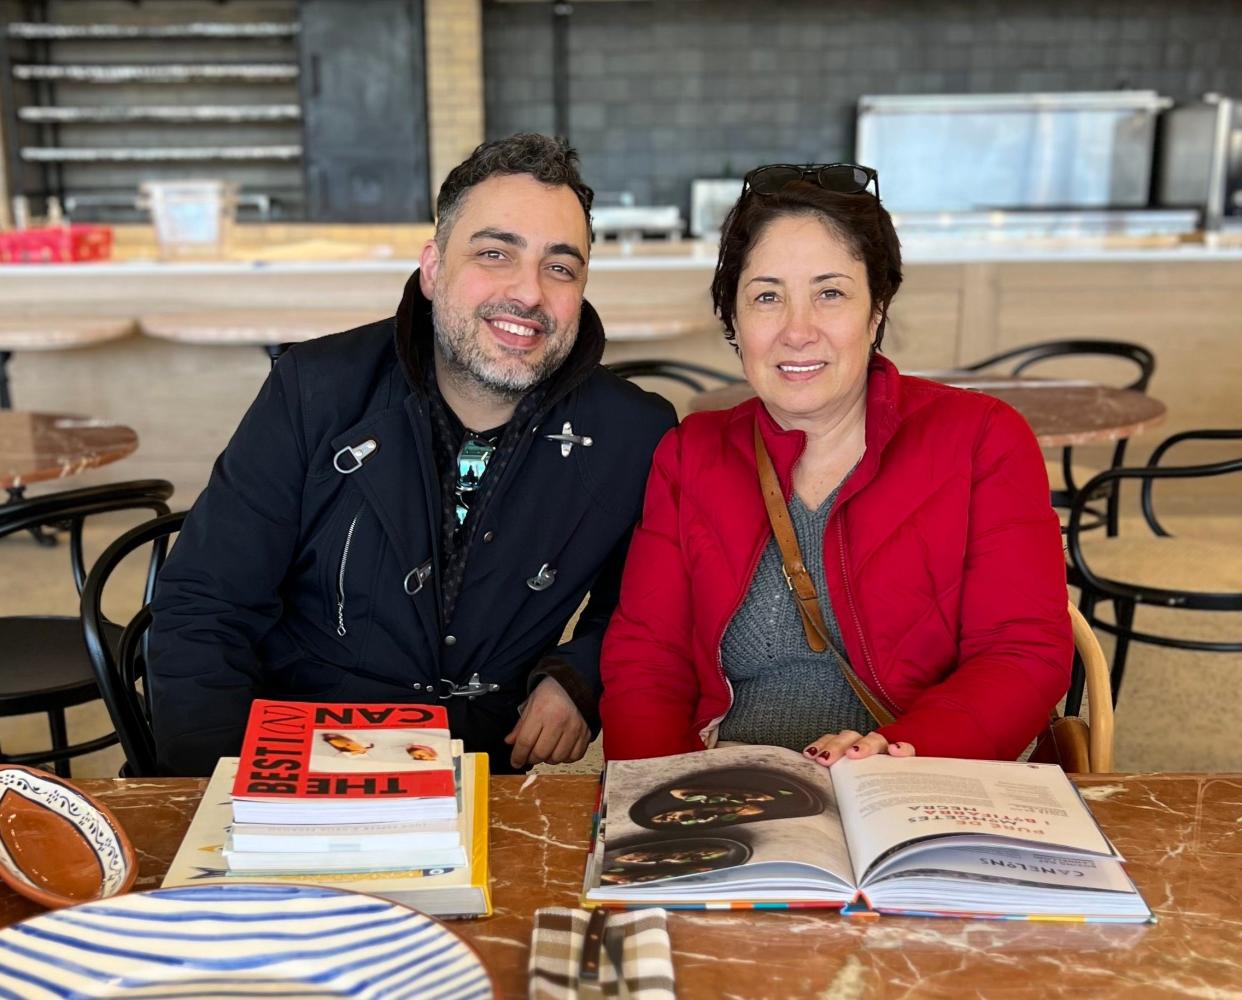 David Viana with his mother, Rosa Lita Viana, inside Lita restaurant.